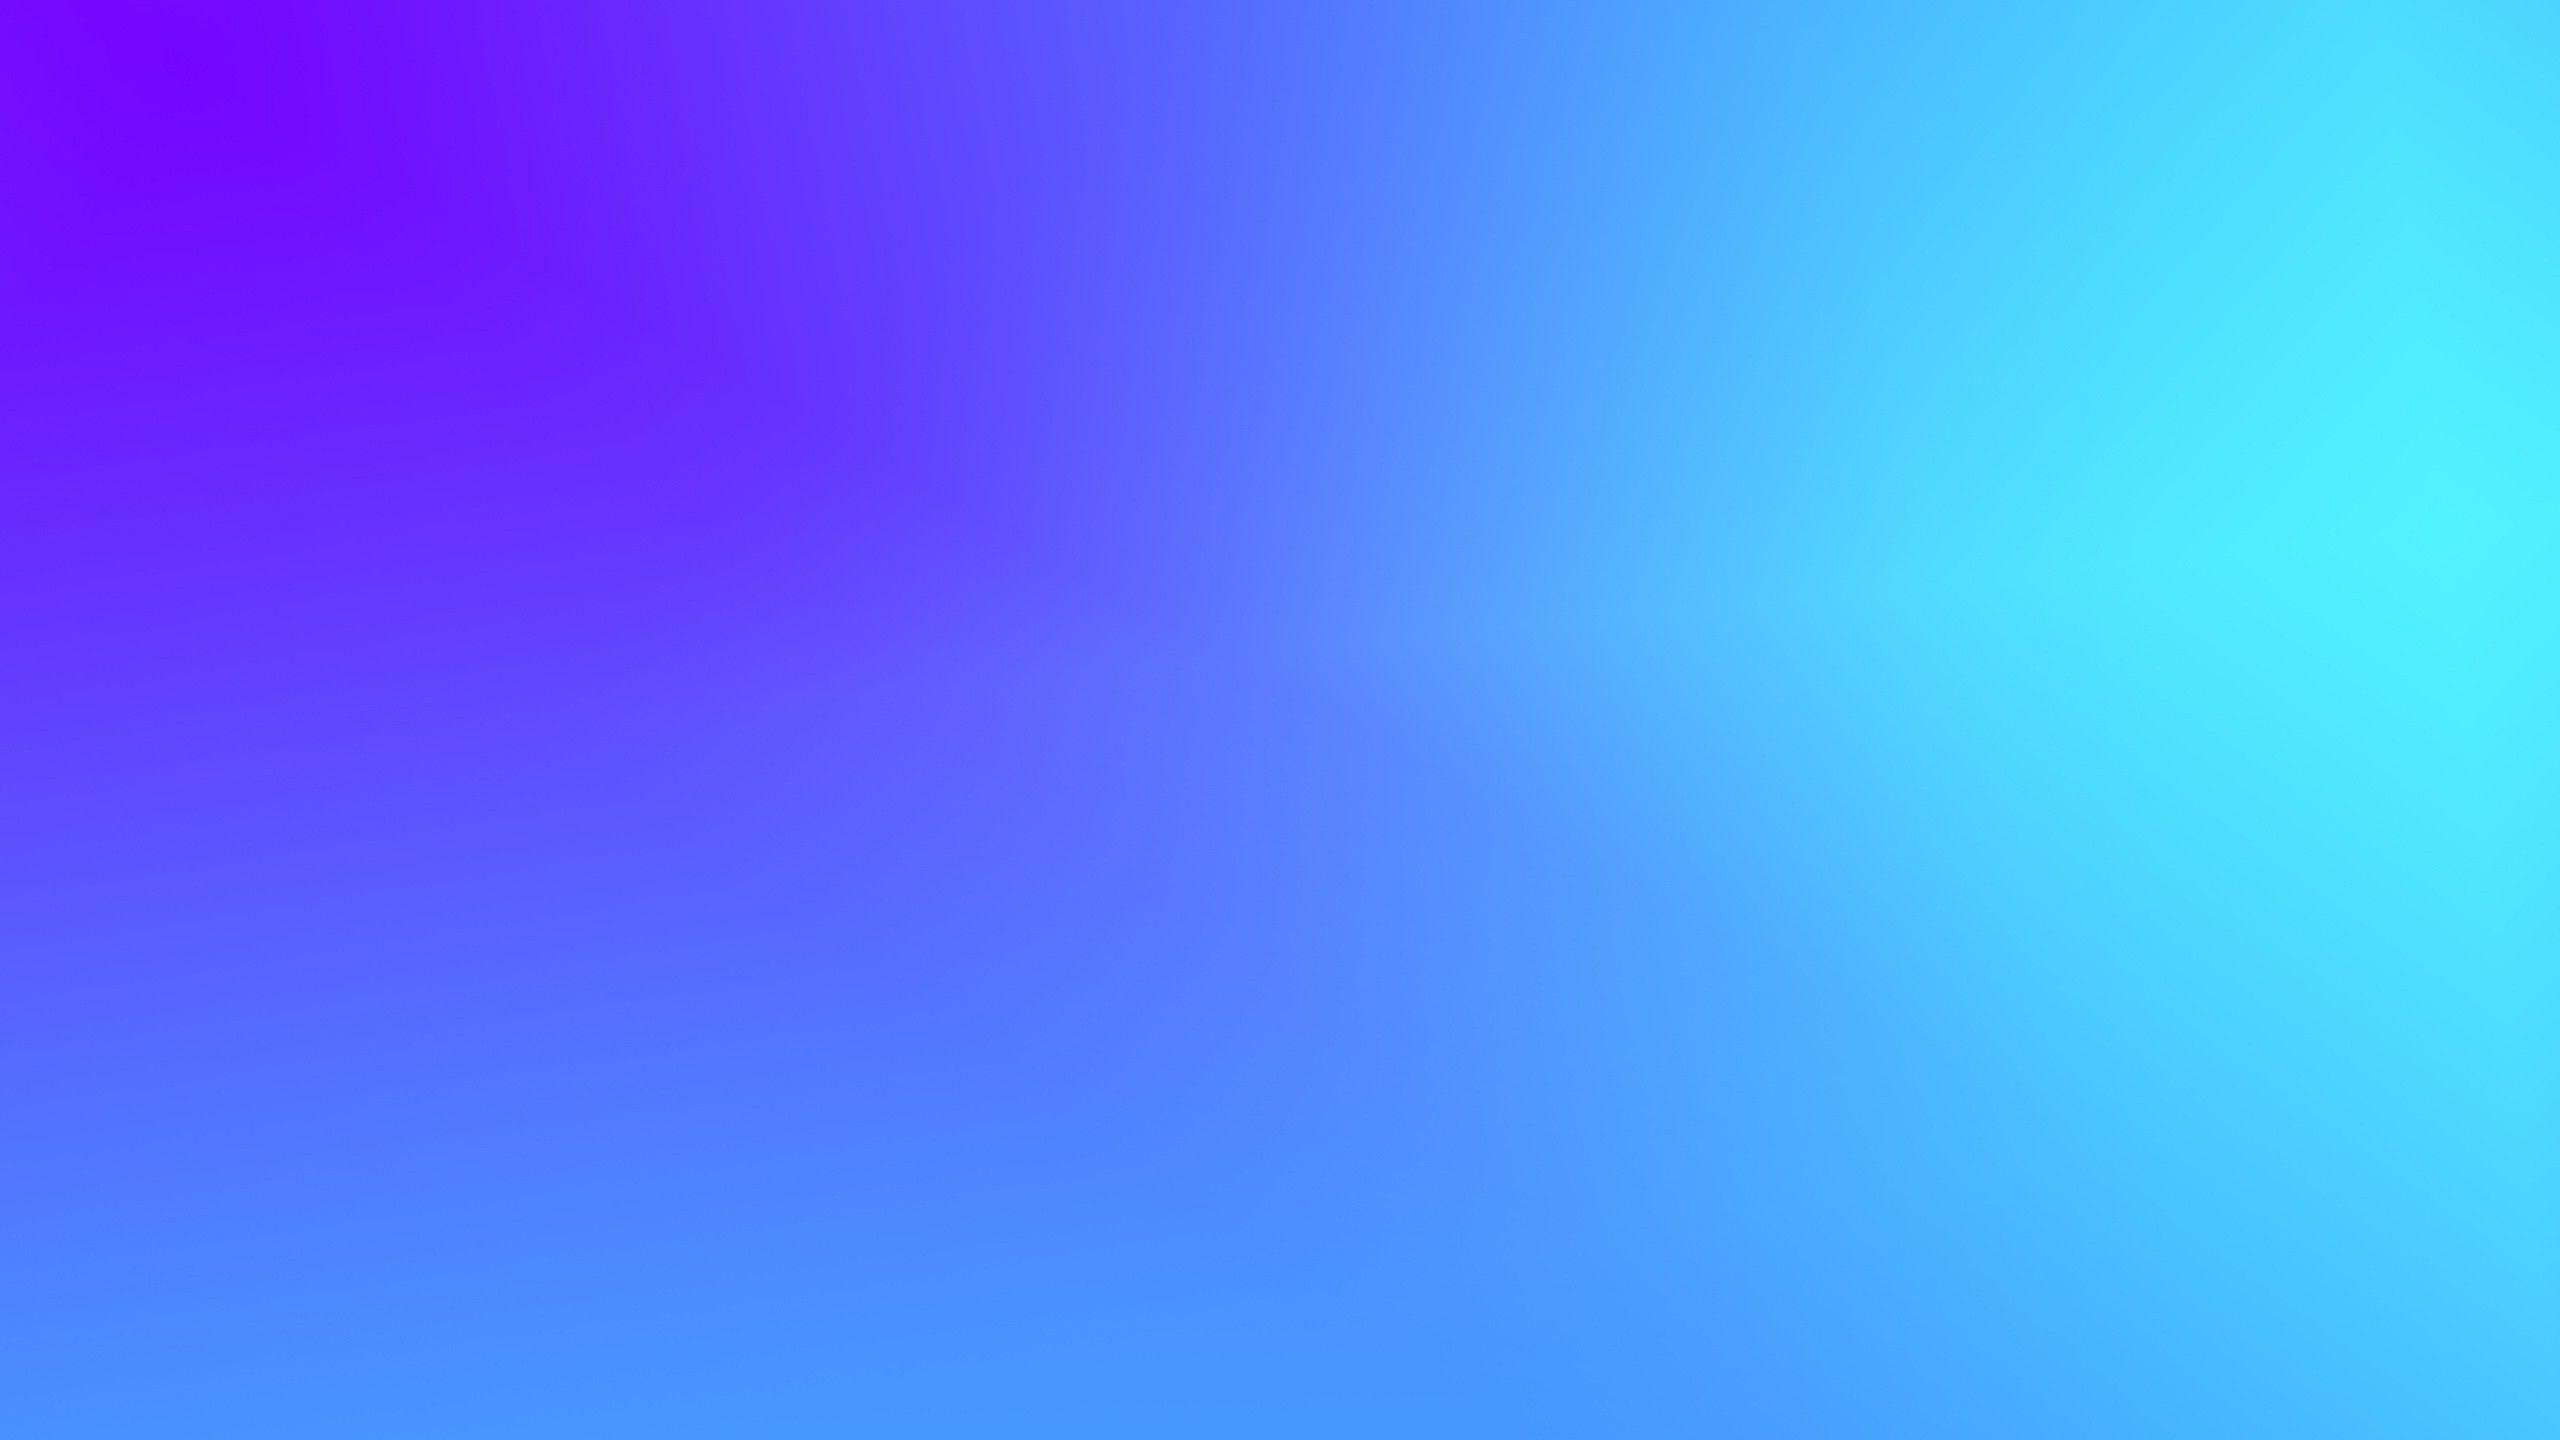 Blue Ombre Background Images  Free Download on Freepik